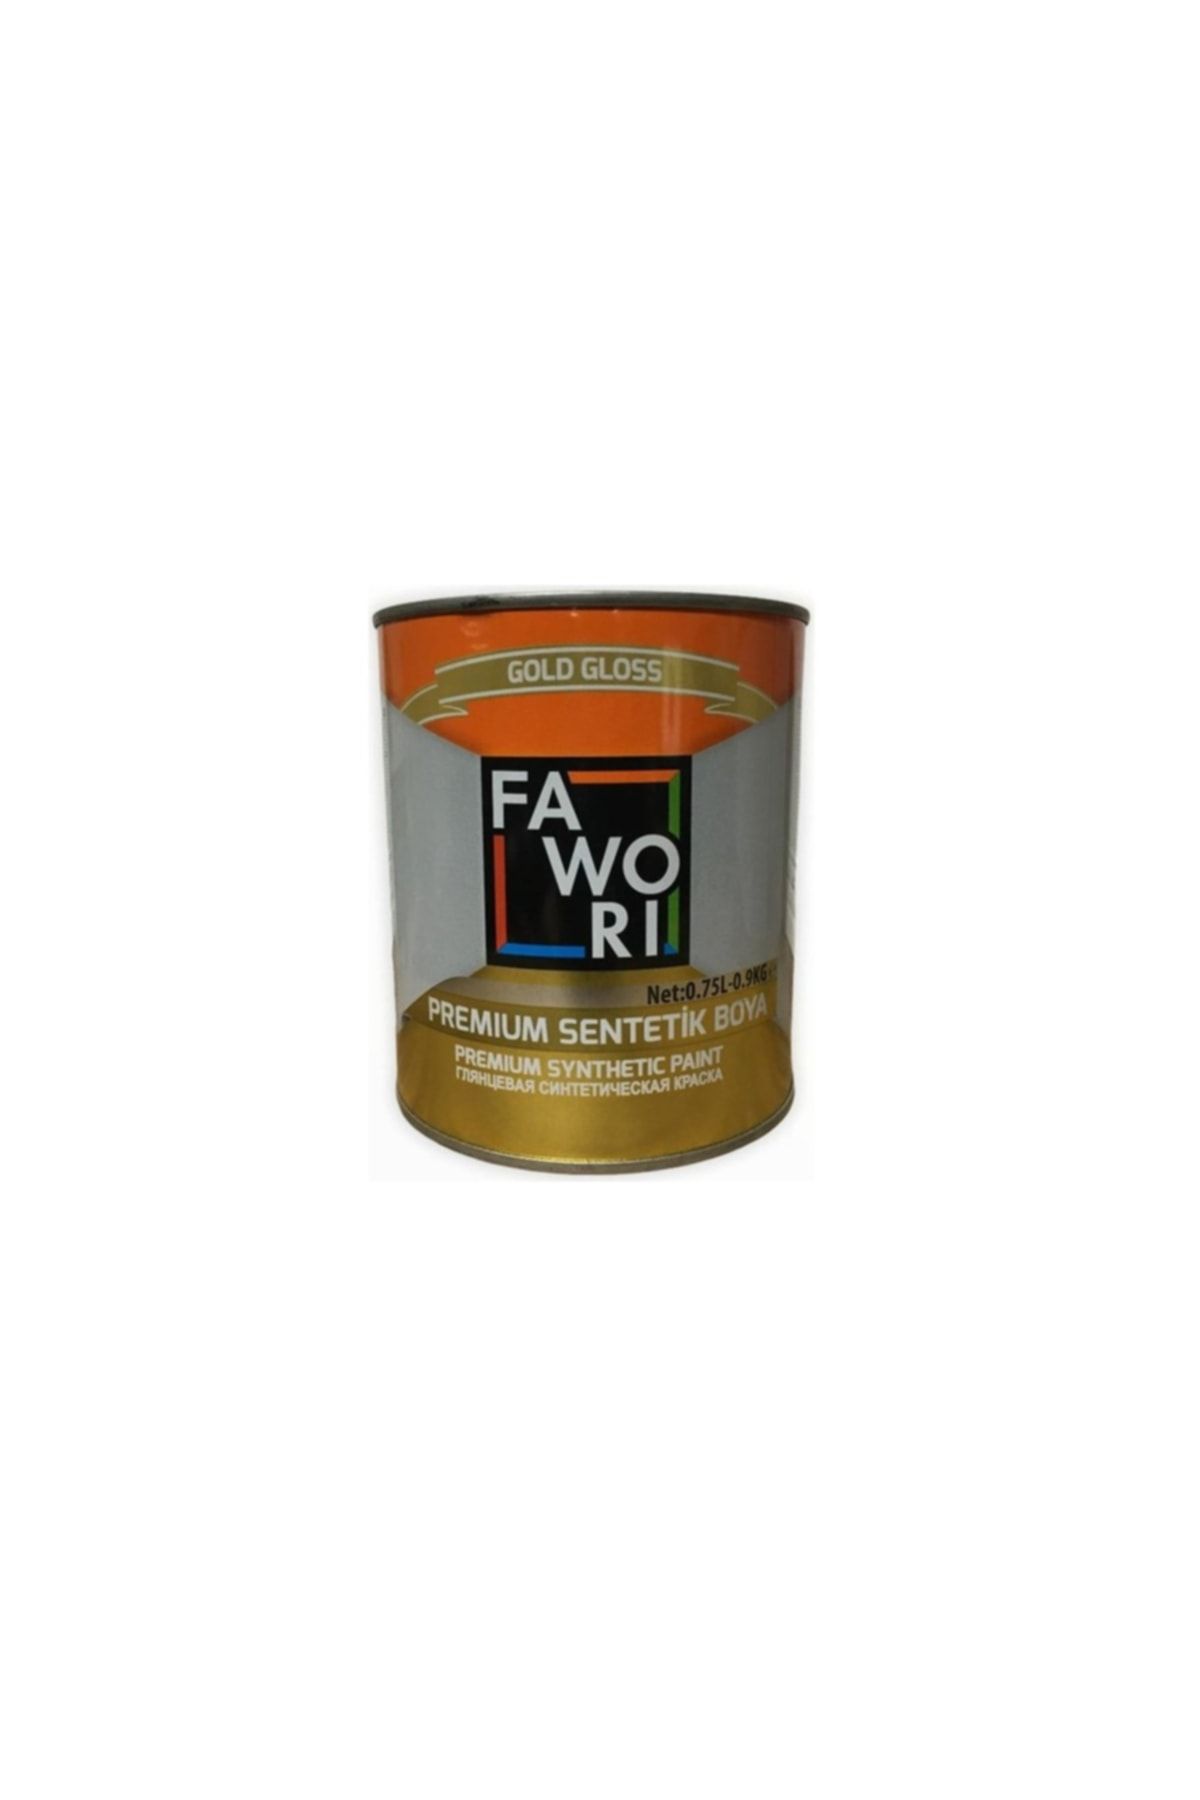 Fawori Premium Sentetik Boya Siyah 0,75 lt